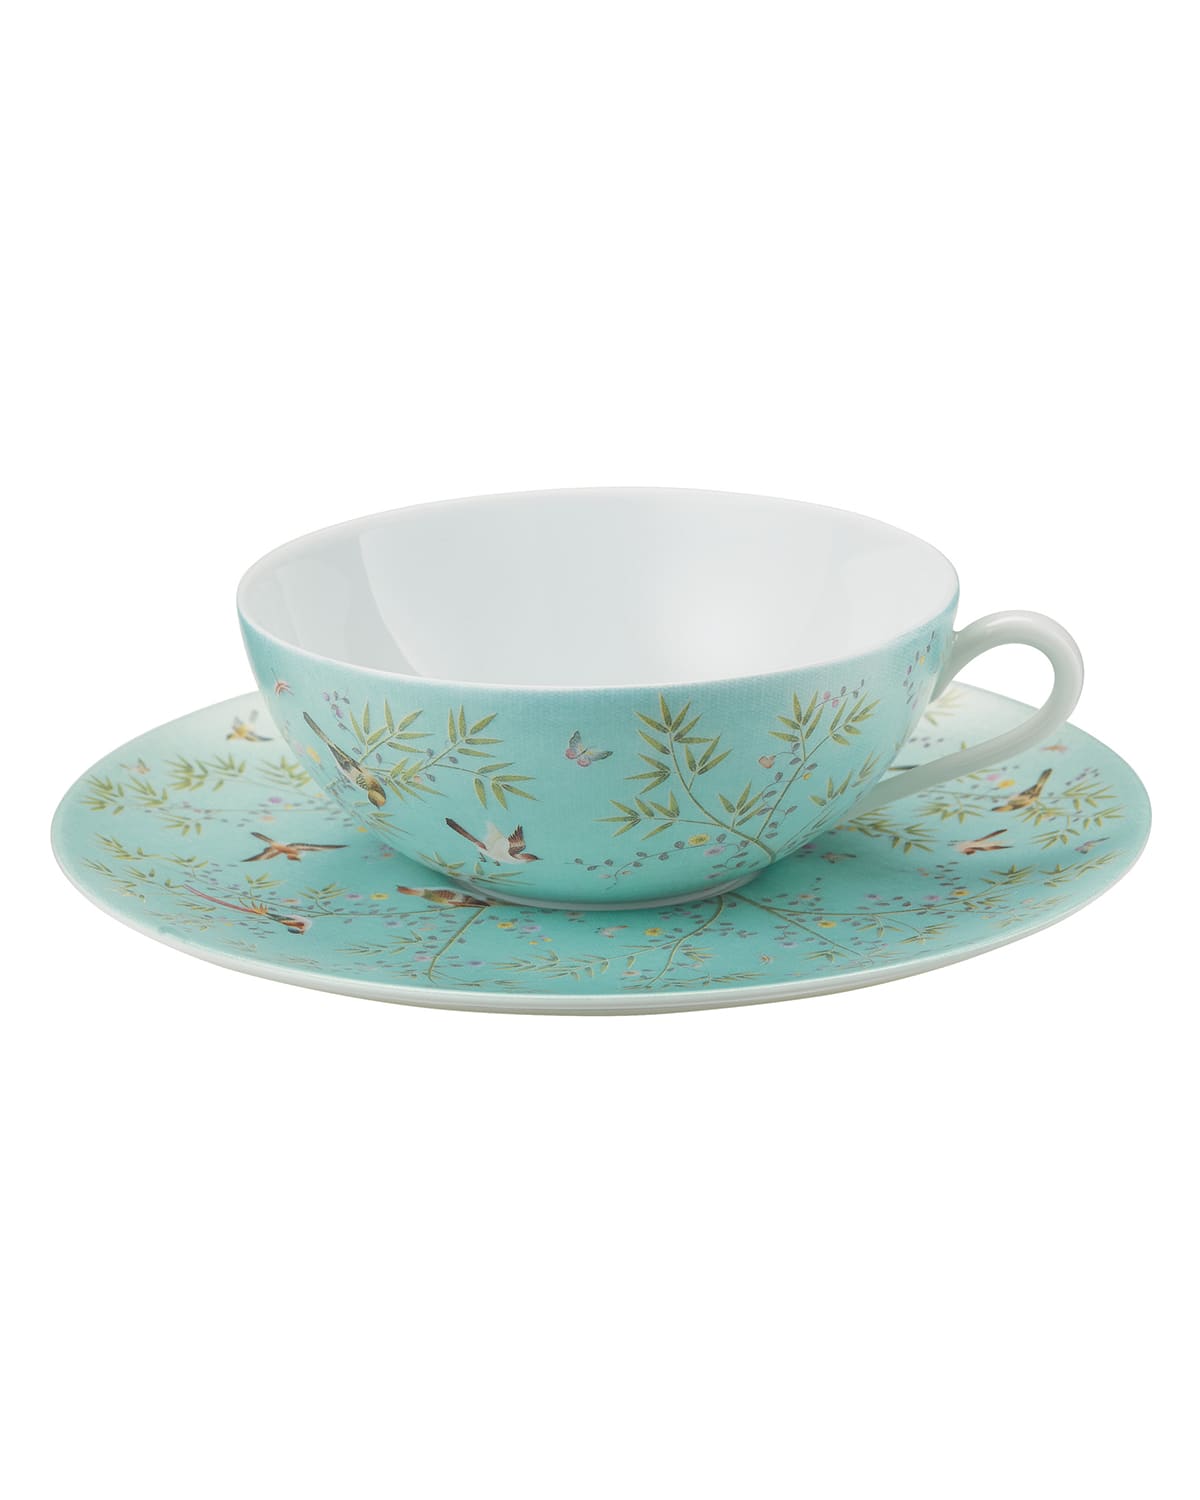 Paradis Turquoise Tea Cup